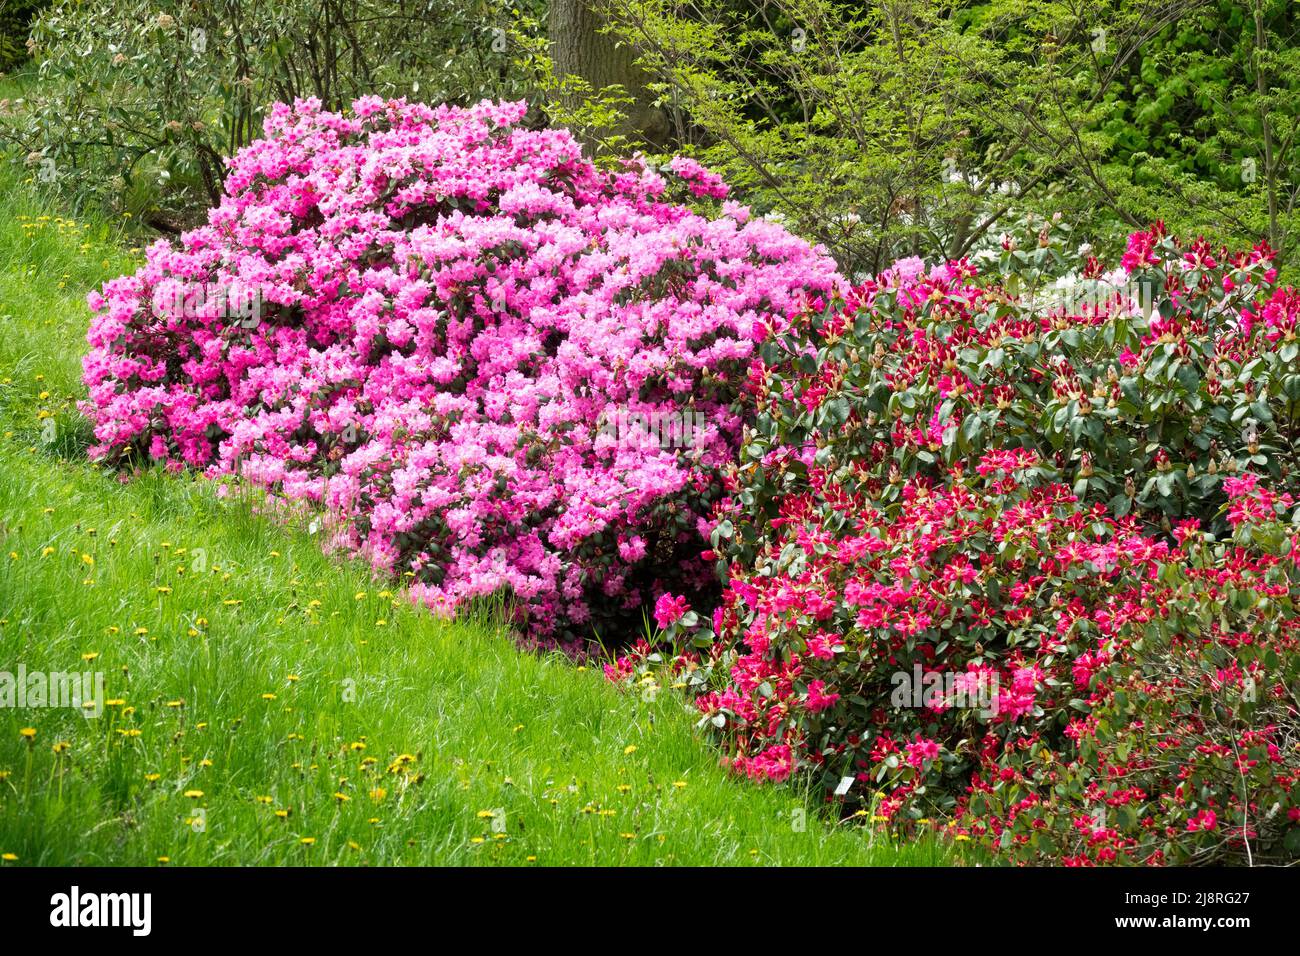 Rhododendron 'Vater Böhlje' flowering shrubs in spring garden Stock Photo